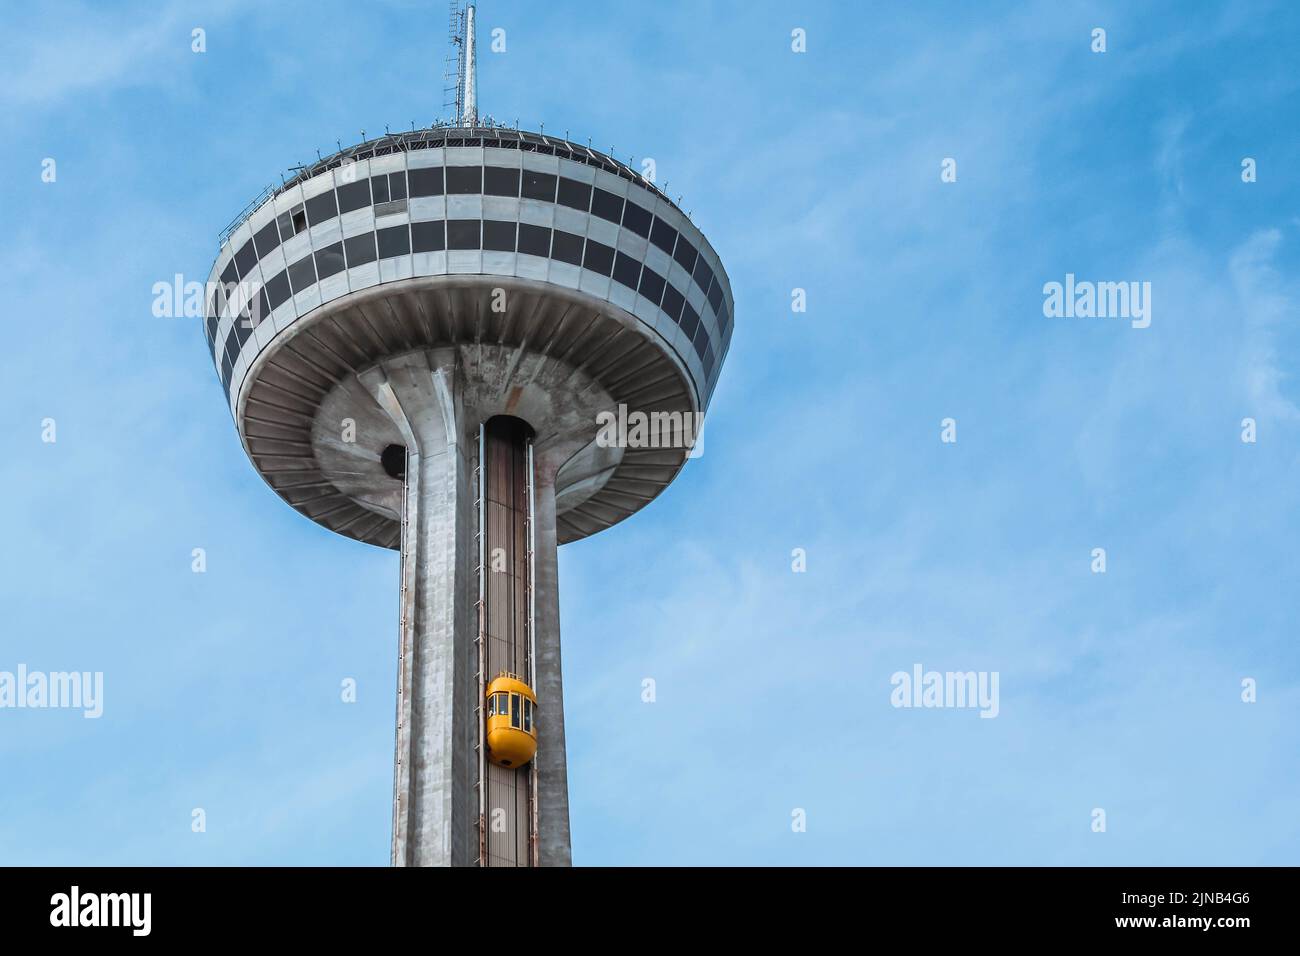 Niagara Falls, Ontario Canada - August 29, 2019: Beautiful view of skylon tower at Niagara falls with blue sky and green trees. Stock Photo